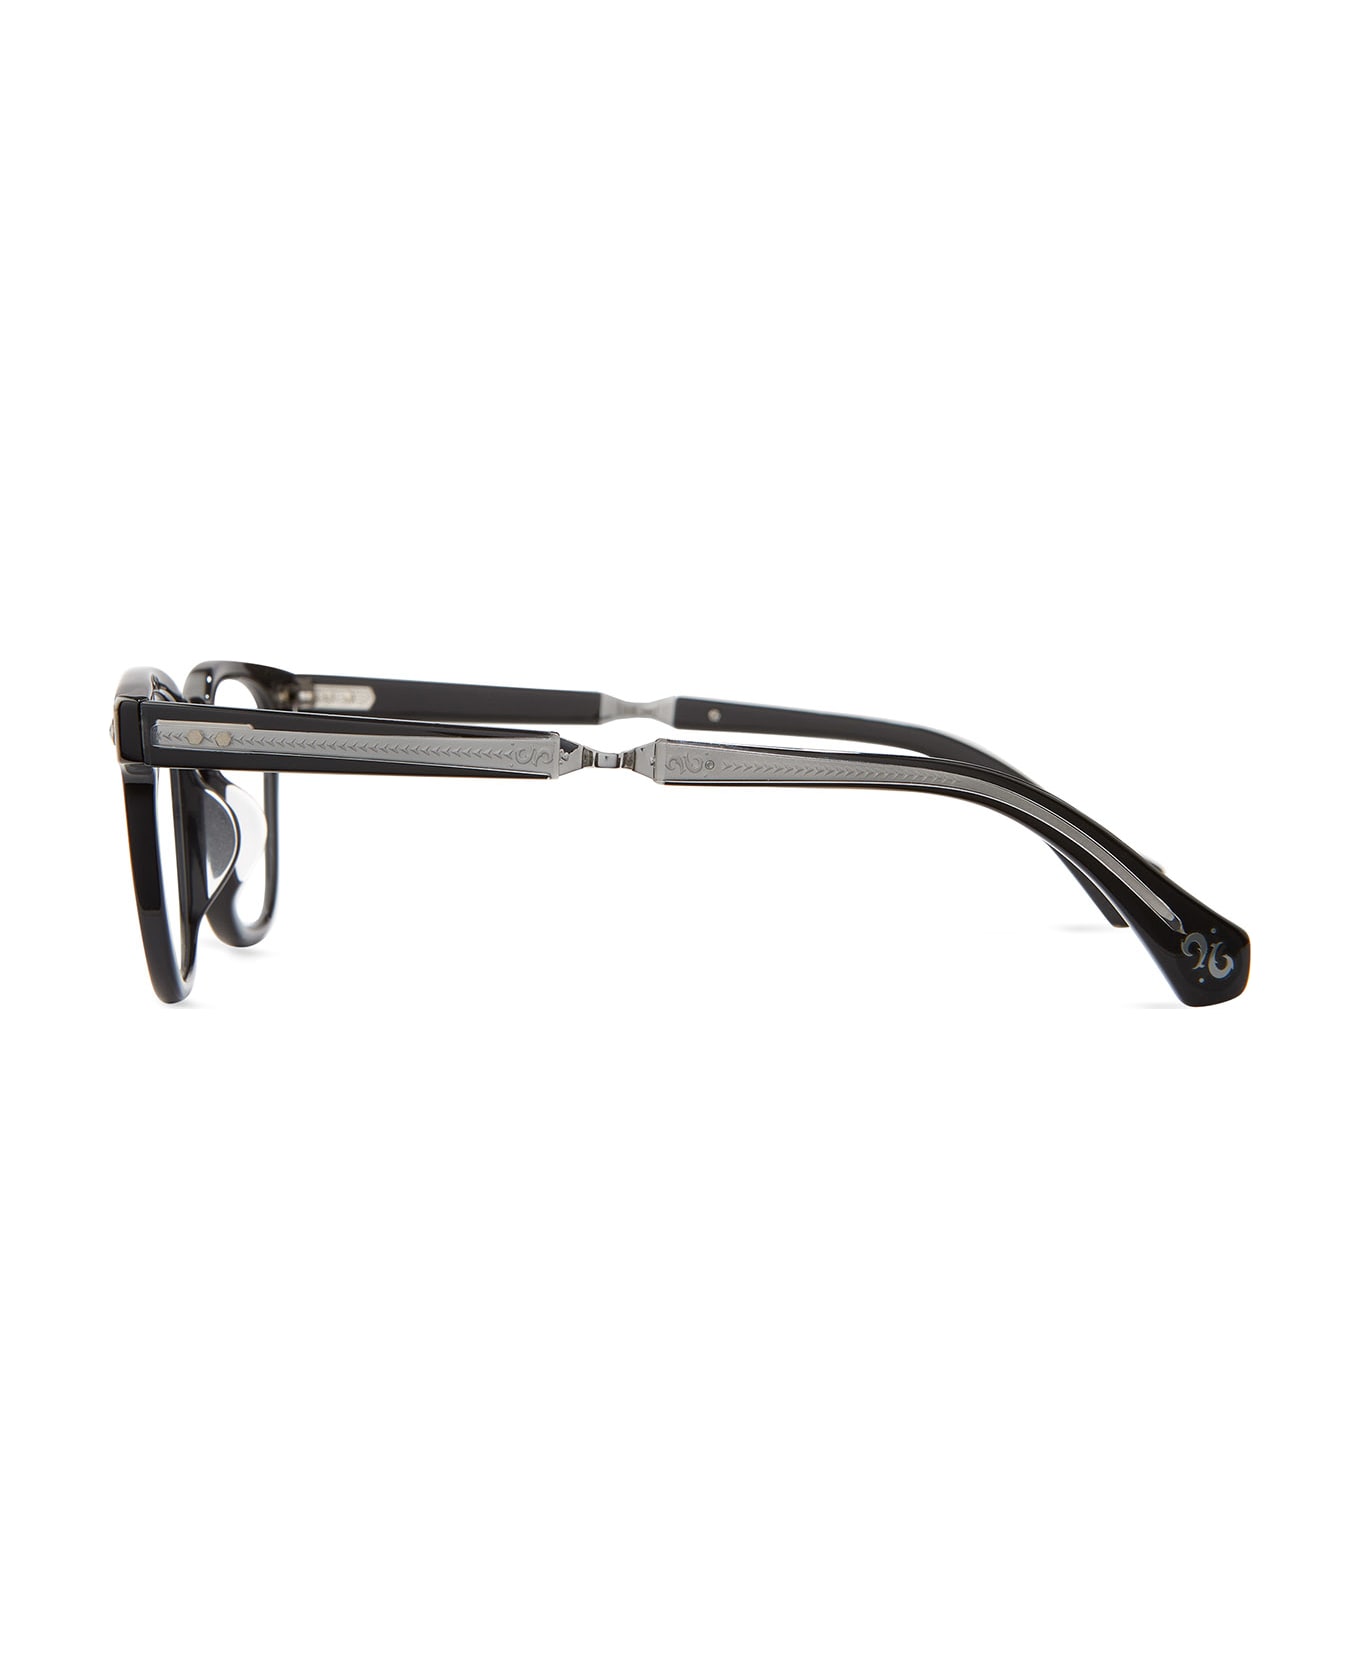 Mr. Leight Dean C 44 Black-pewter Glasses - 44 Black-Pewter